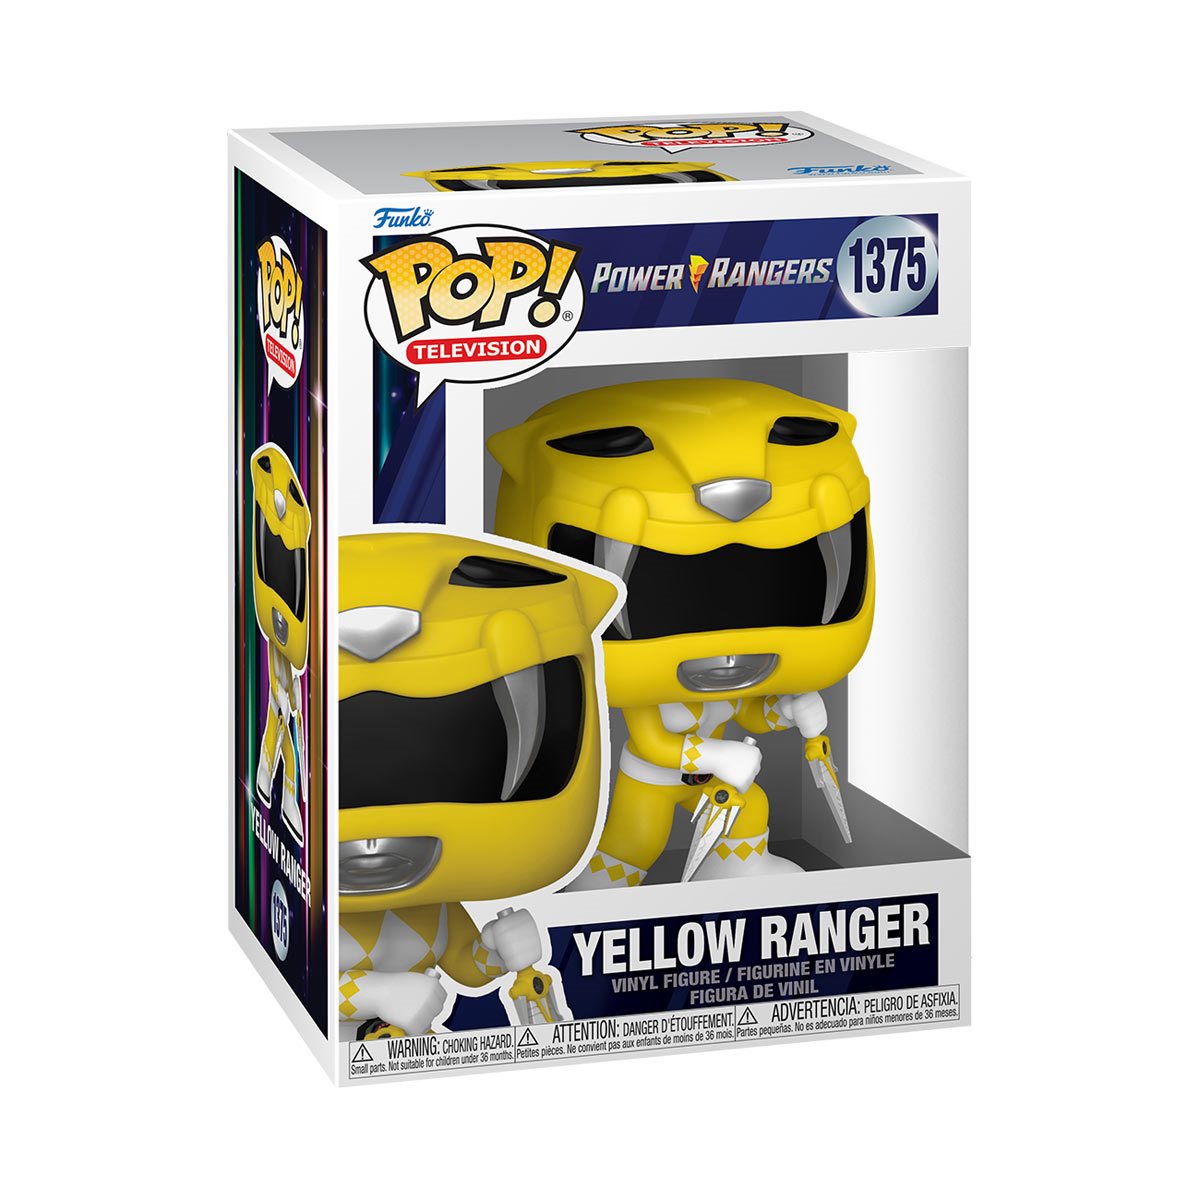 Mighty Morphin Yellow Ranger 30th Anniversary Pop! Vinyl Figure